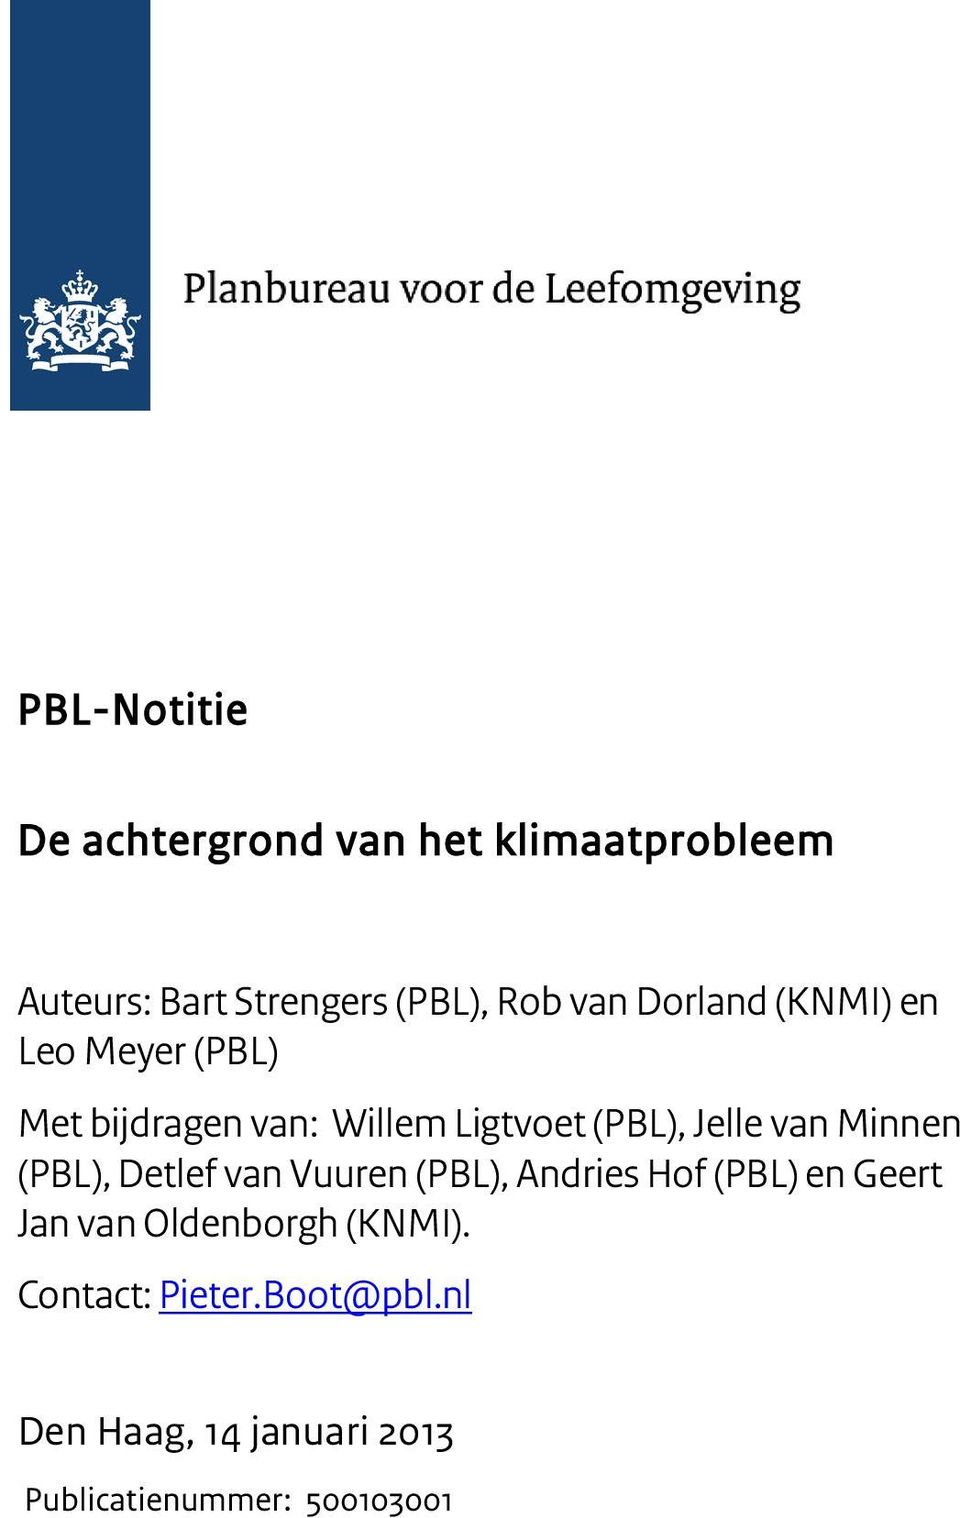 van Minnen (PBL), Detlef van Vuuren (PBL), Andries Hof (PBL) en Geert Jan van